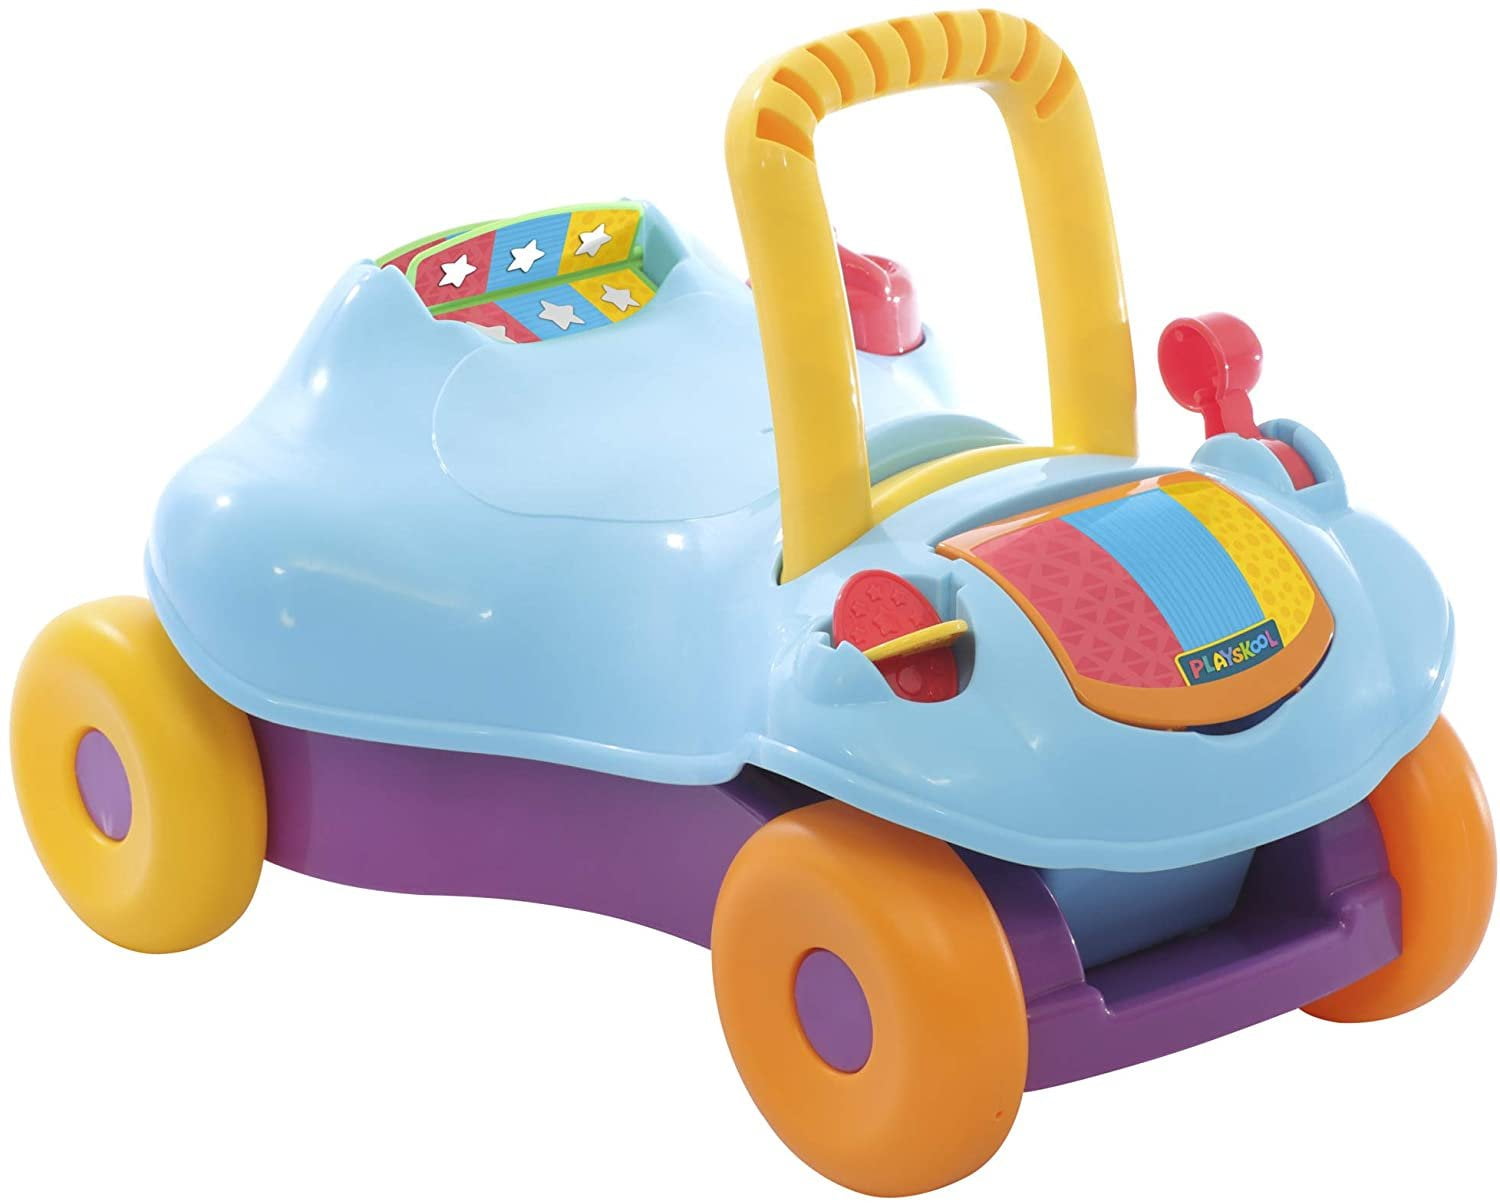 Playskool Step Start Walk & Active 2-in-1 Ride-On & Walker Toy Toddlers & Babies 